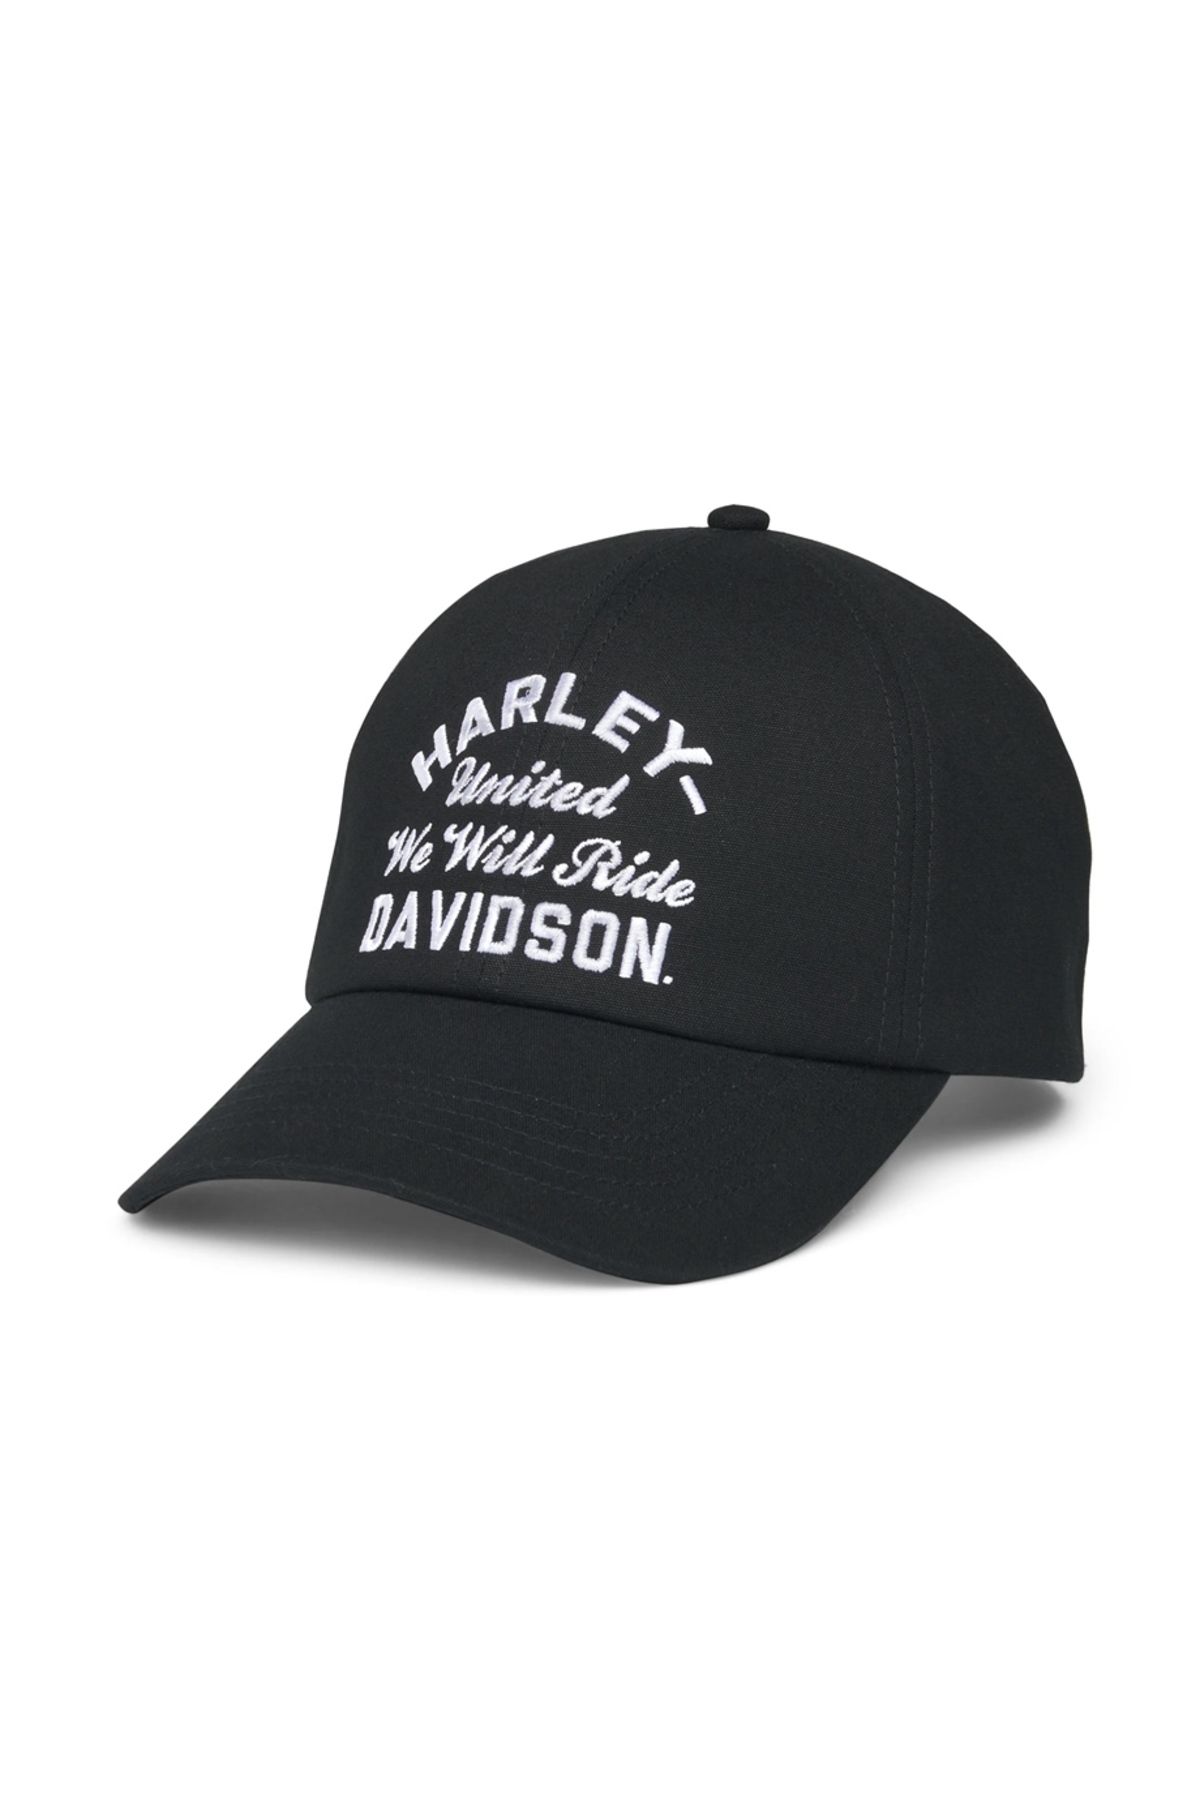 Harley Davidson Harley-Davidson Women's Metropolitan Baseball Cap